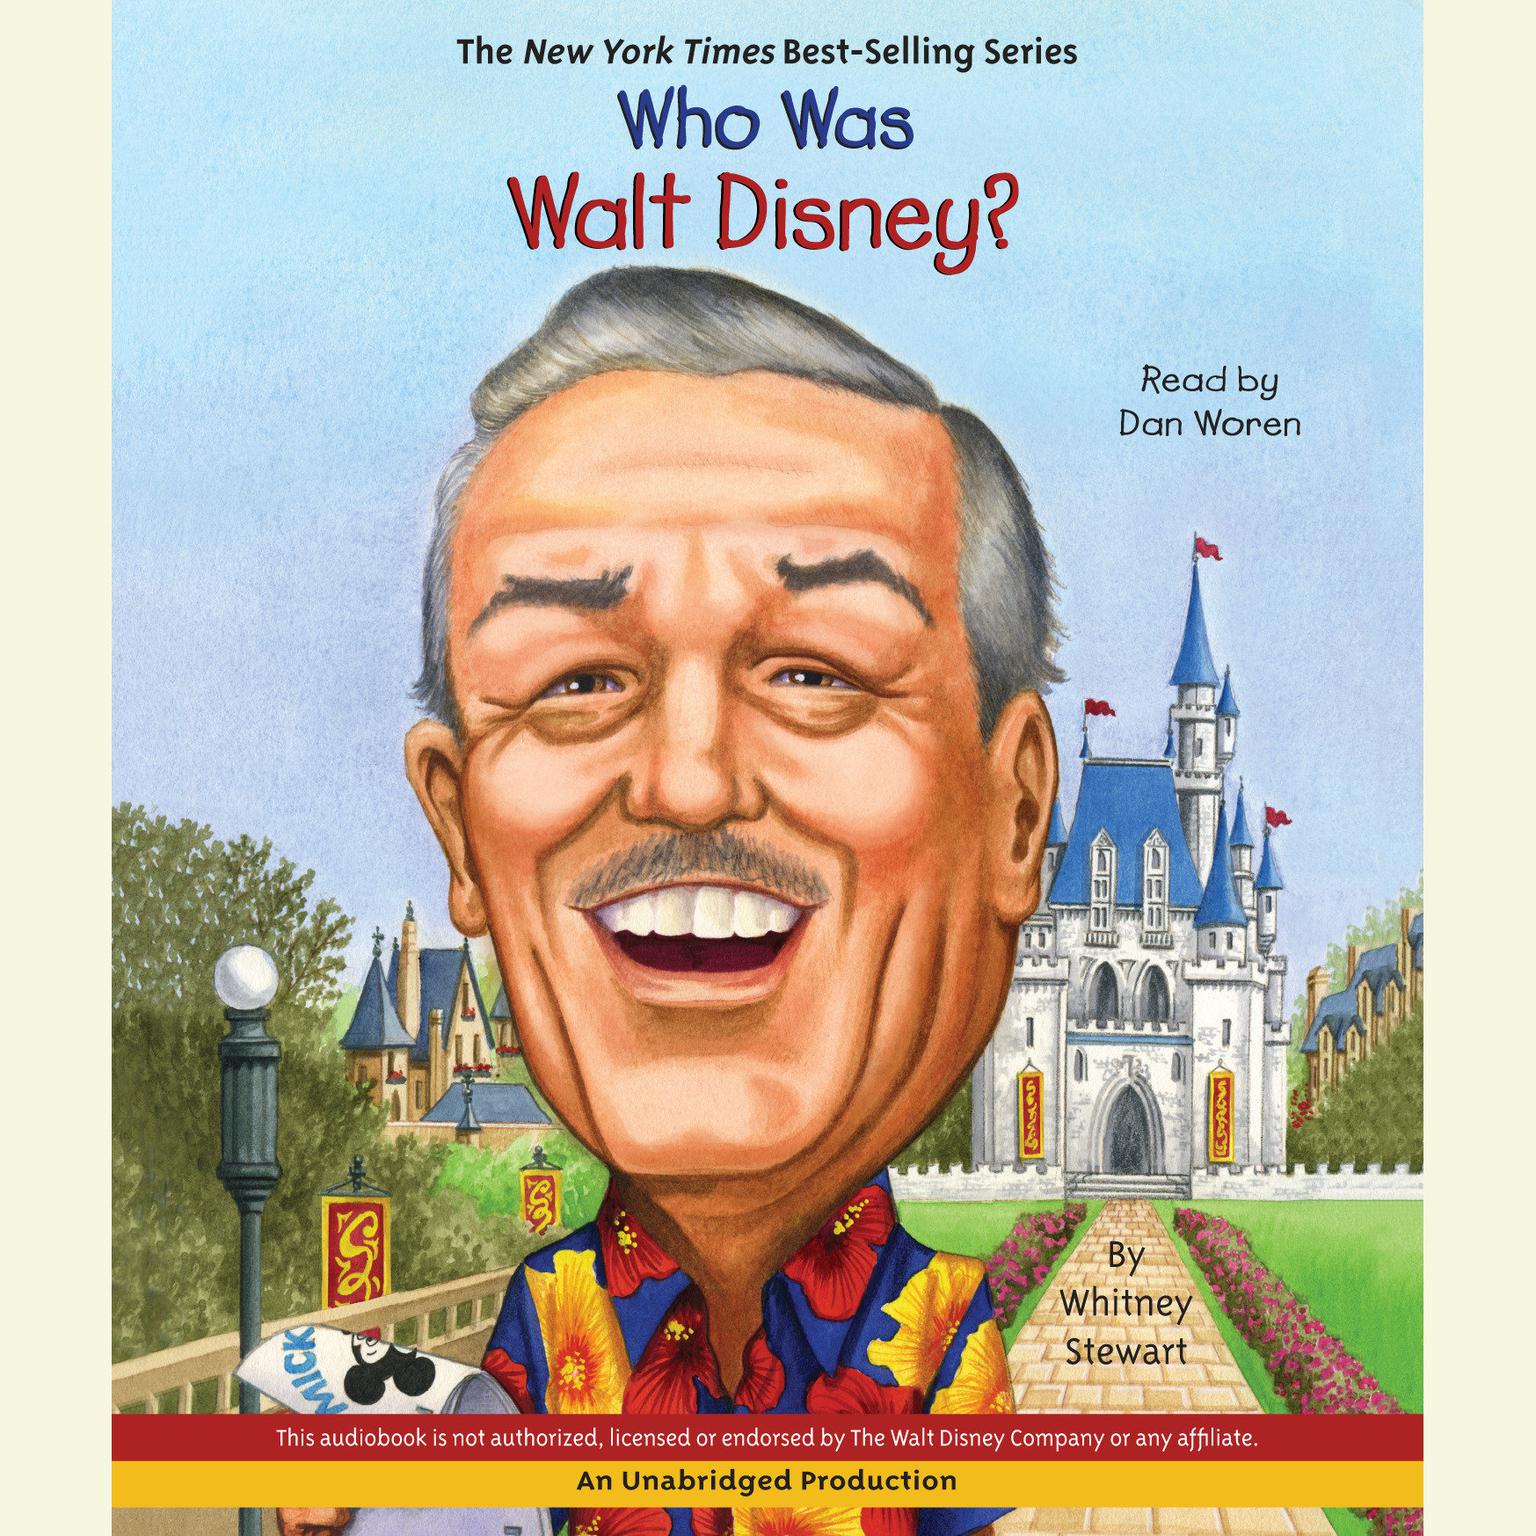 walt disney biography audiobook